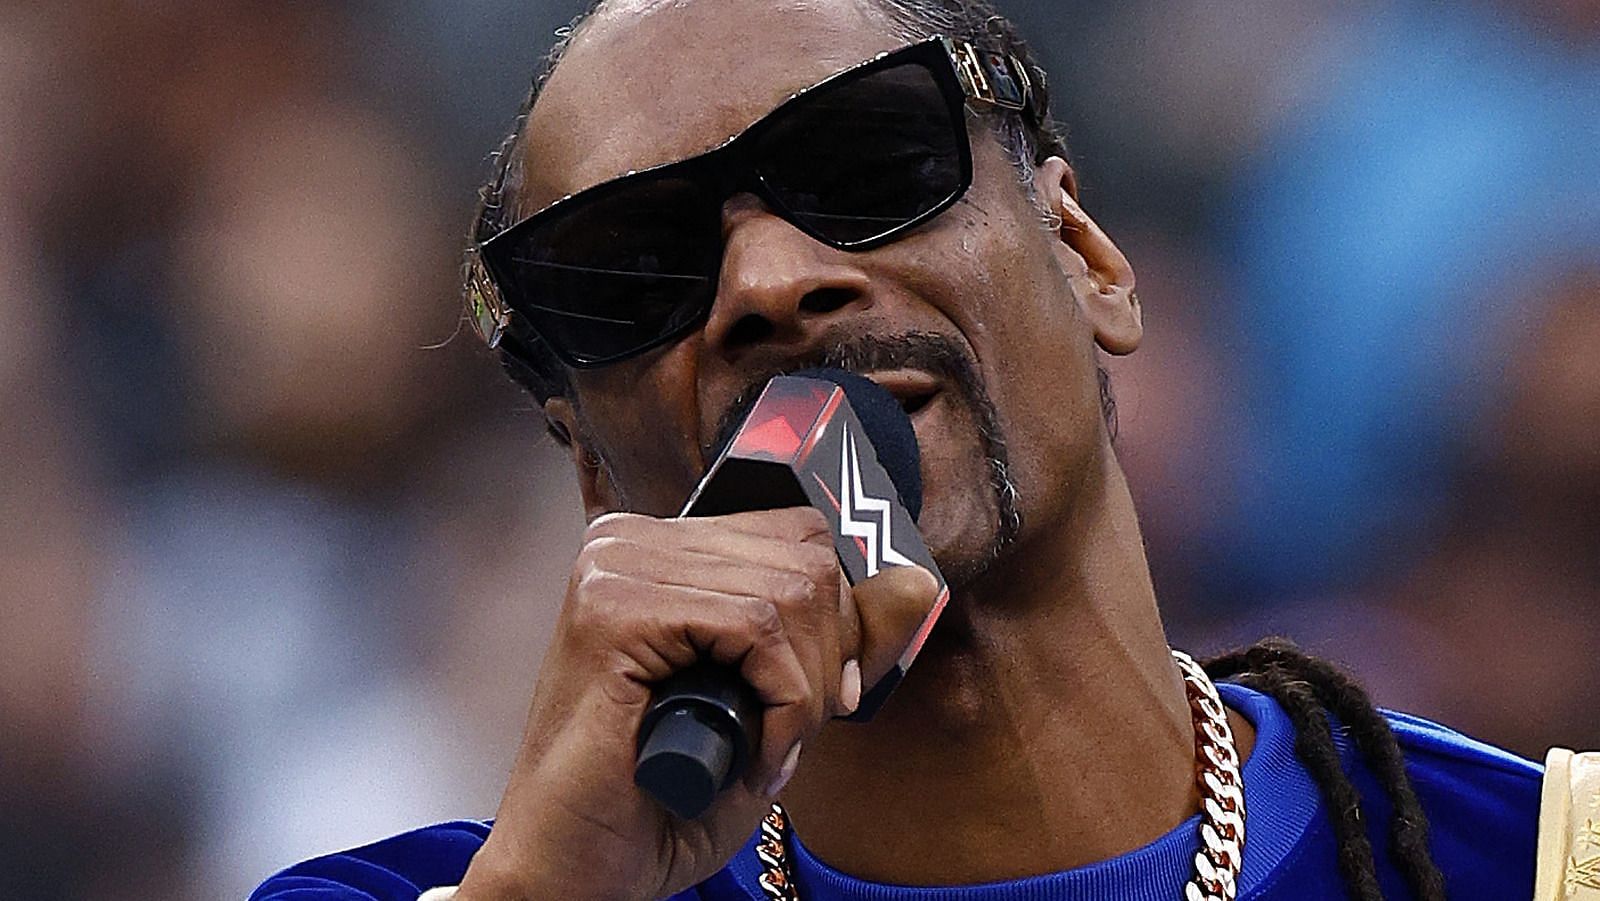 Snoop Dogg did WWE proud tonight